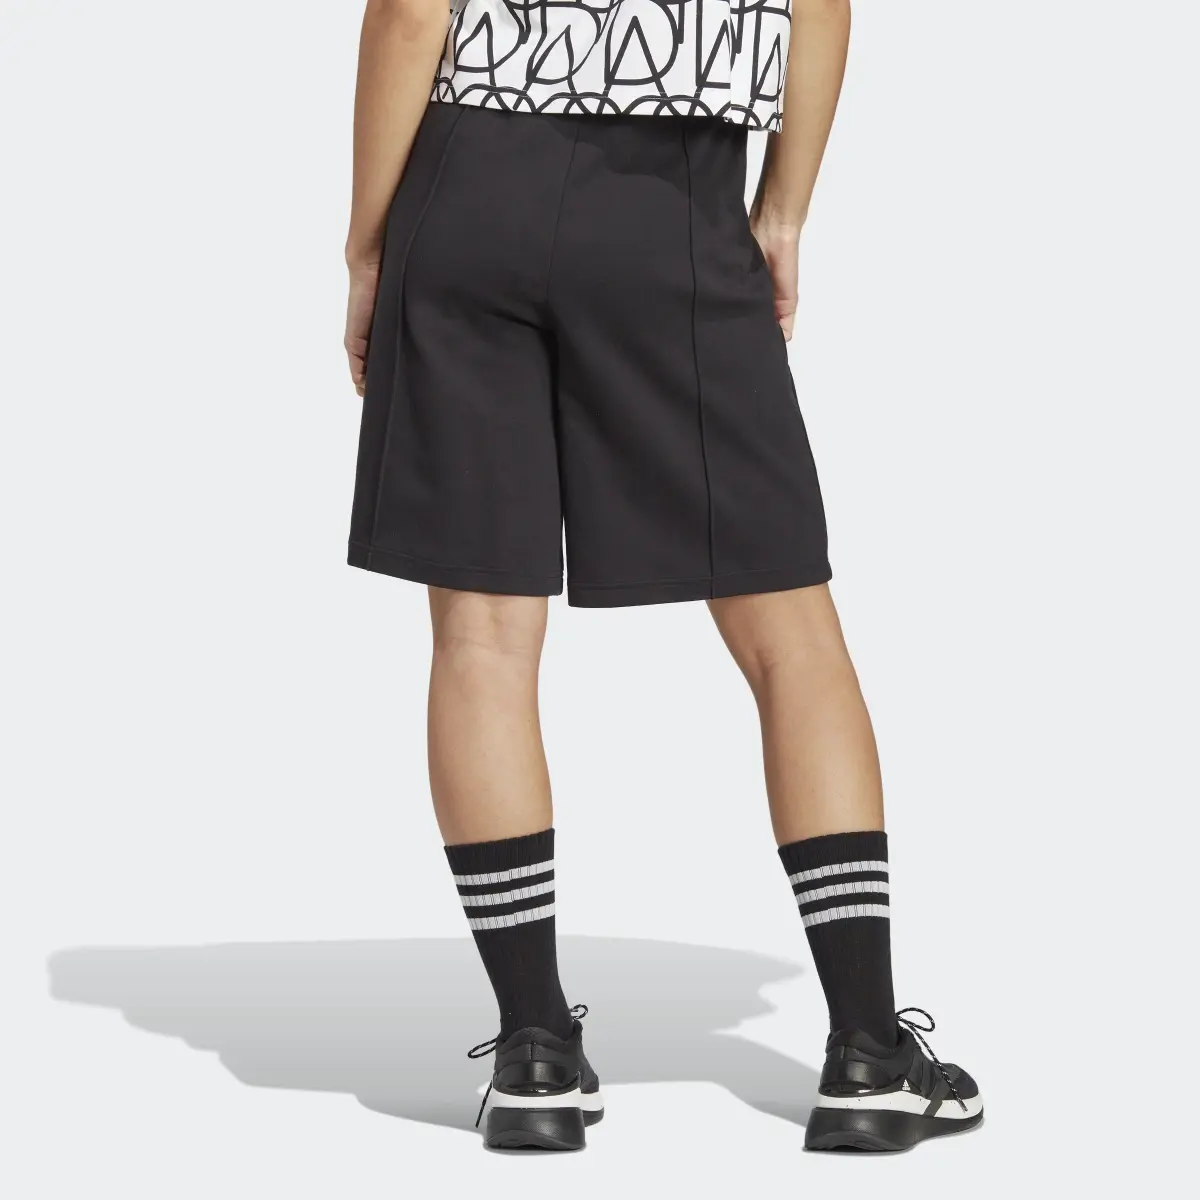 Adidas Allover Graphic Culottes. 2